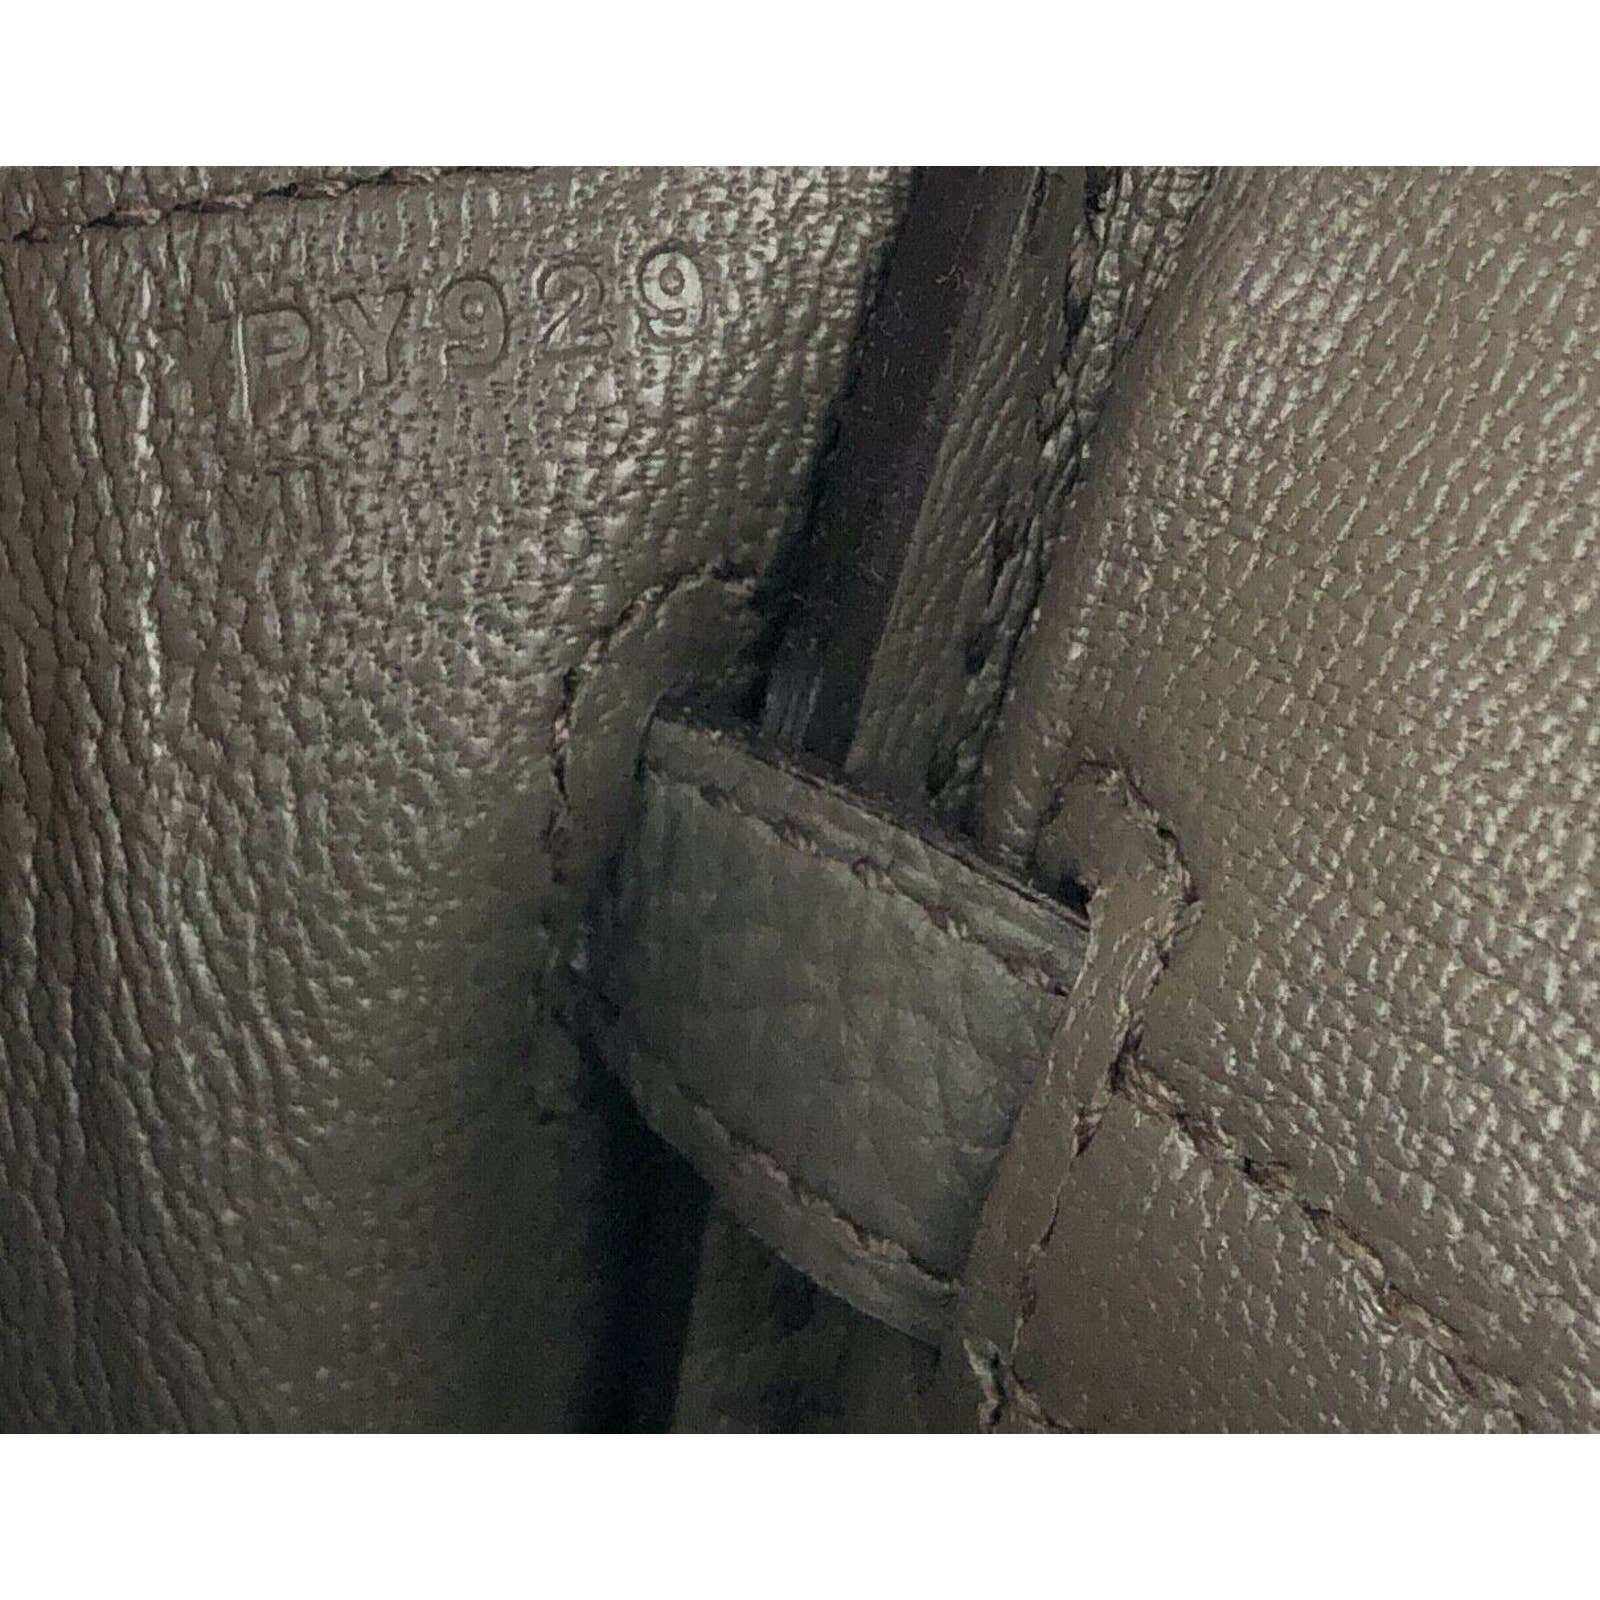 Hermes Birkin 25cm Etain Grey Togo with Gold Hardware Handbag (LEXZX) 144020004232 DO/DE